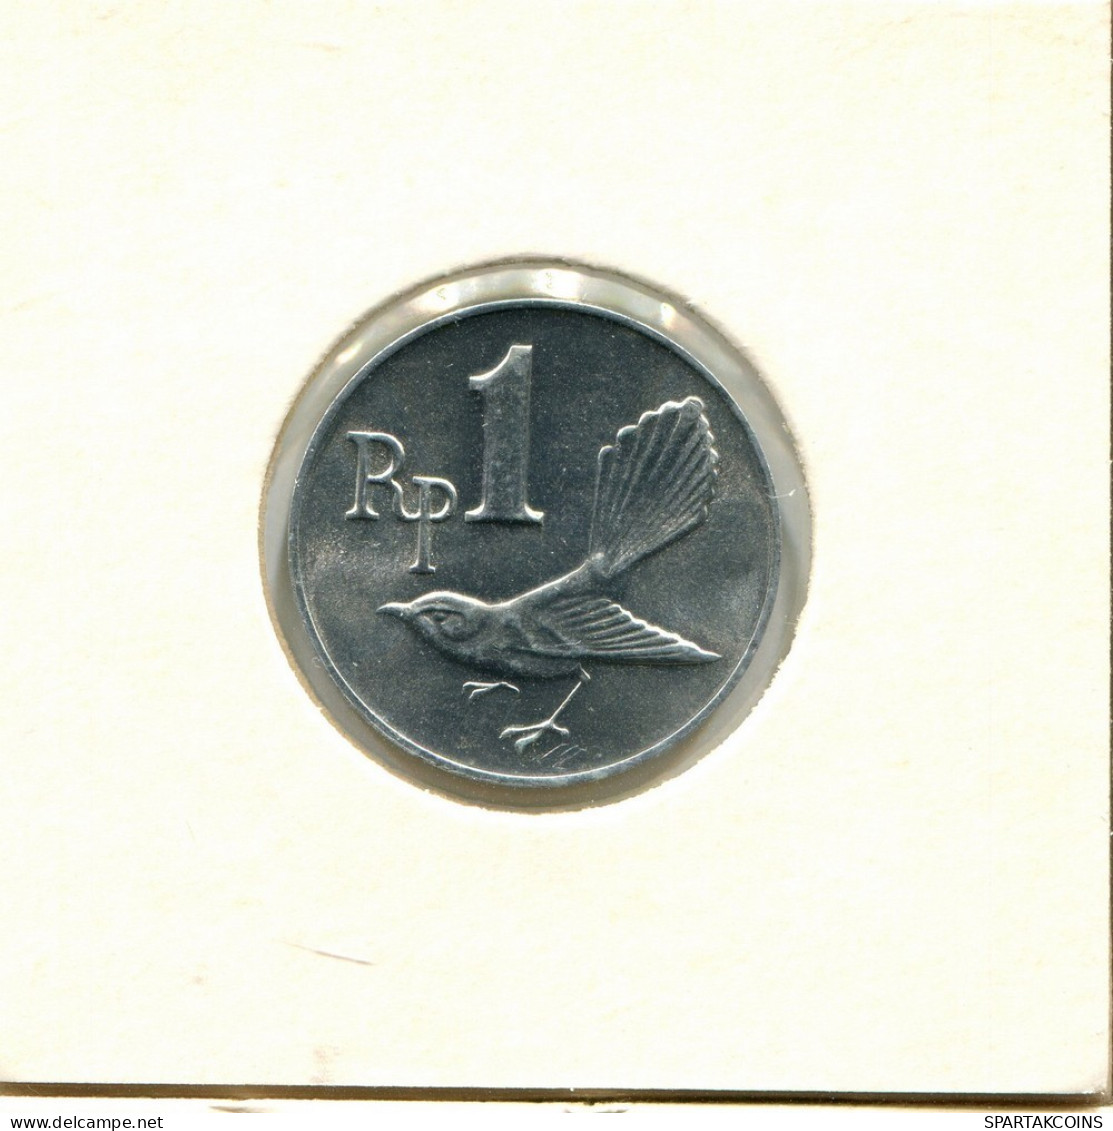 1 RUPIAH 1970 INDONESIA Moneda #AY860.E.A - Indonesia